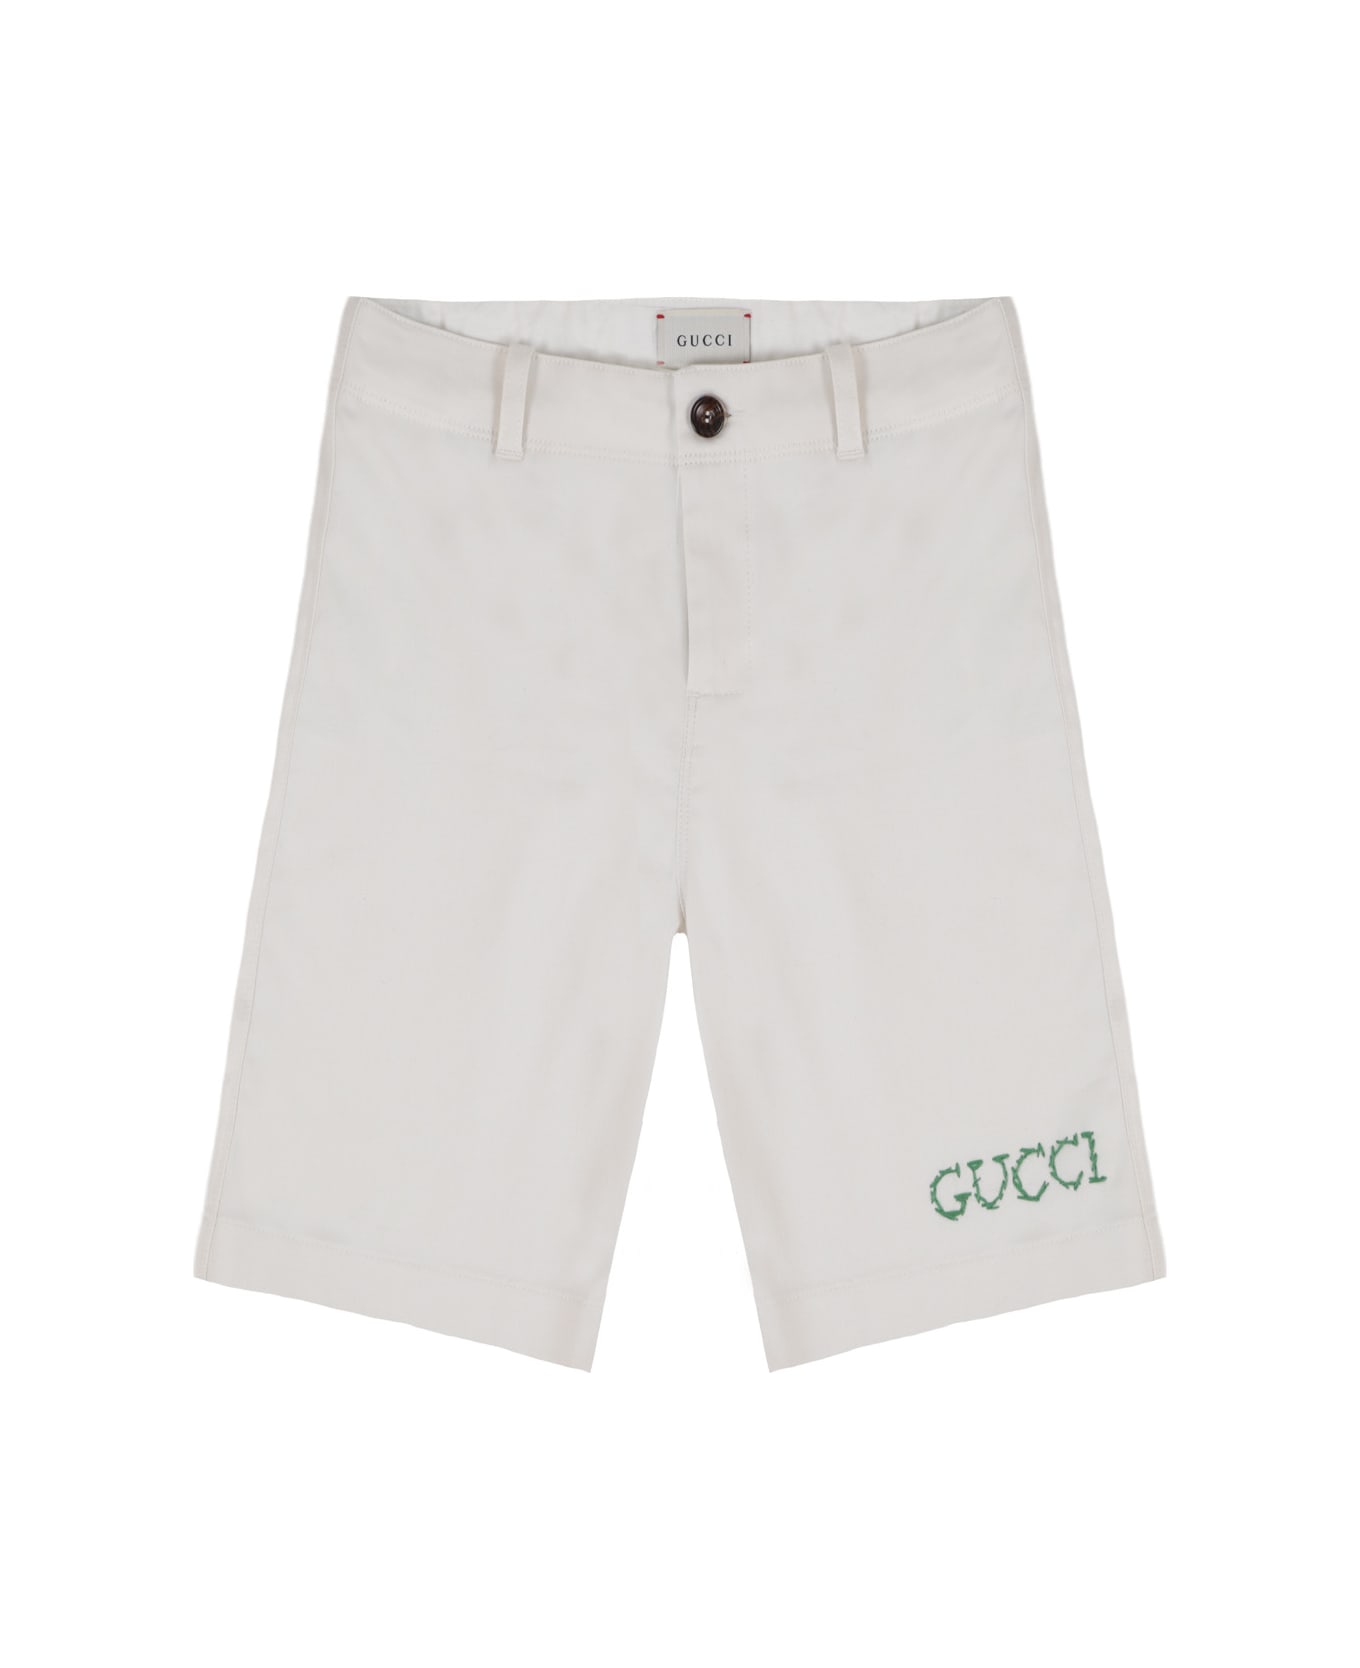 Gucci Cotton Shorts - White ボトムス